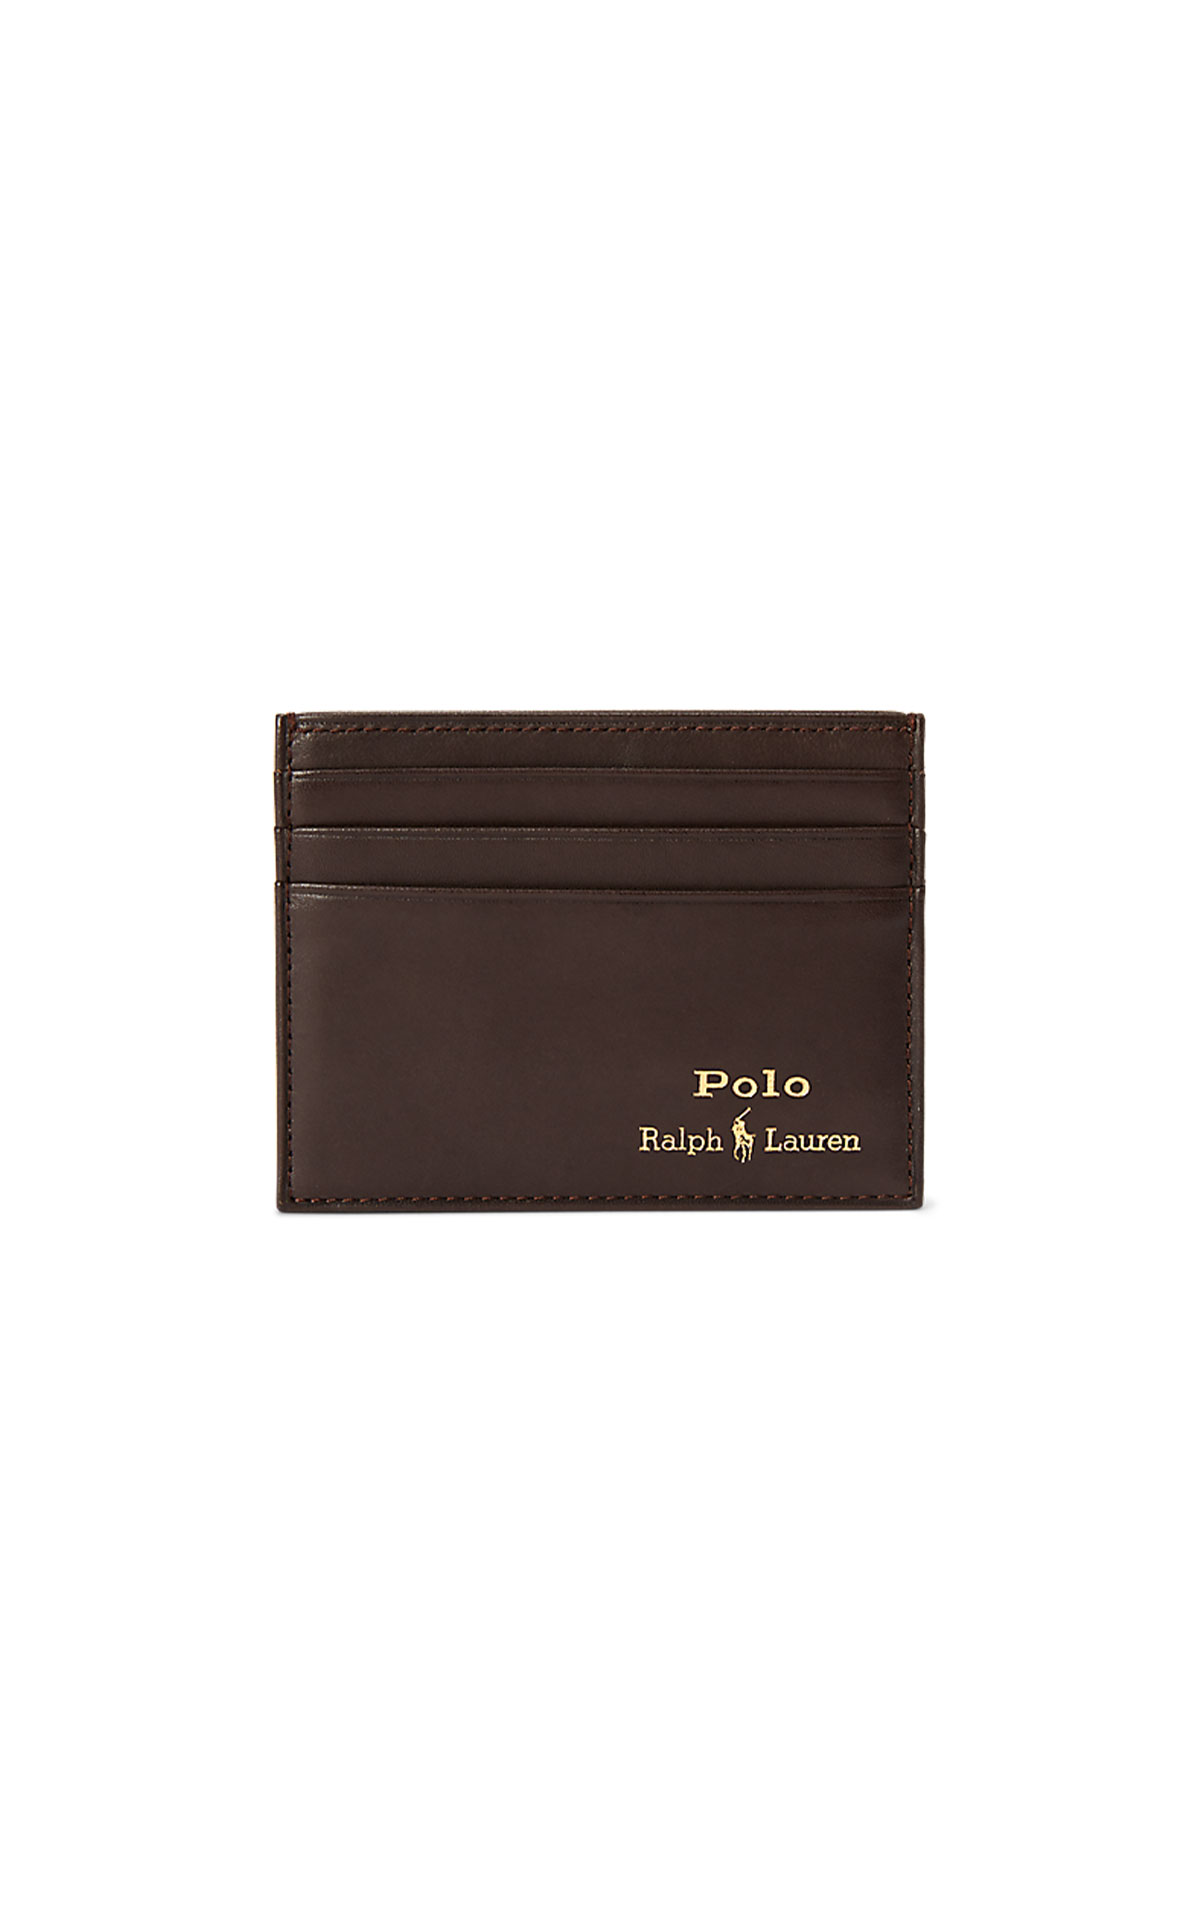 Polo Ralph Lauren Men & Women Foil branded card case from Bicester Village